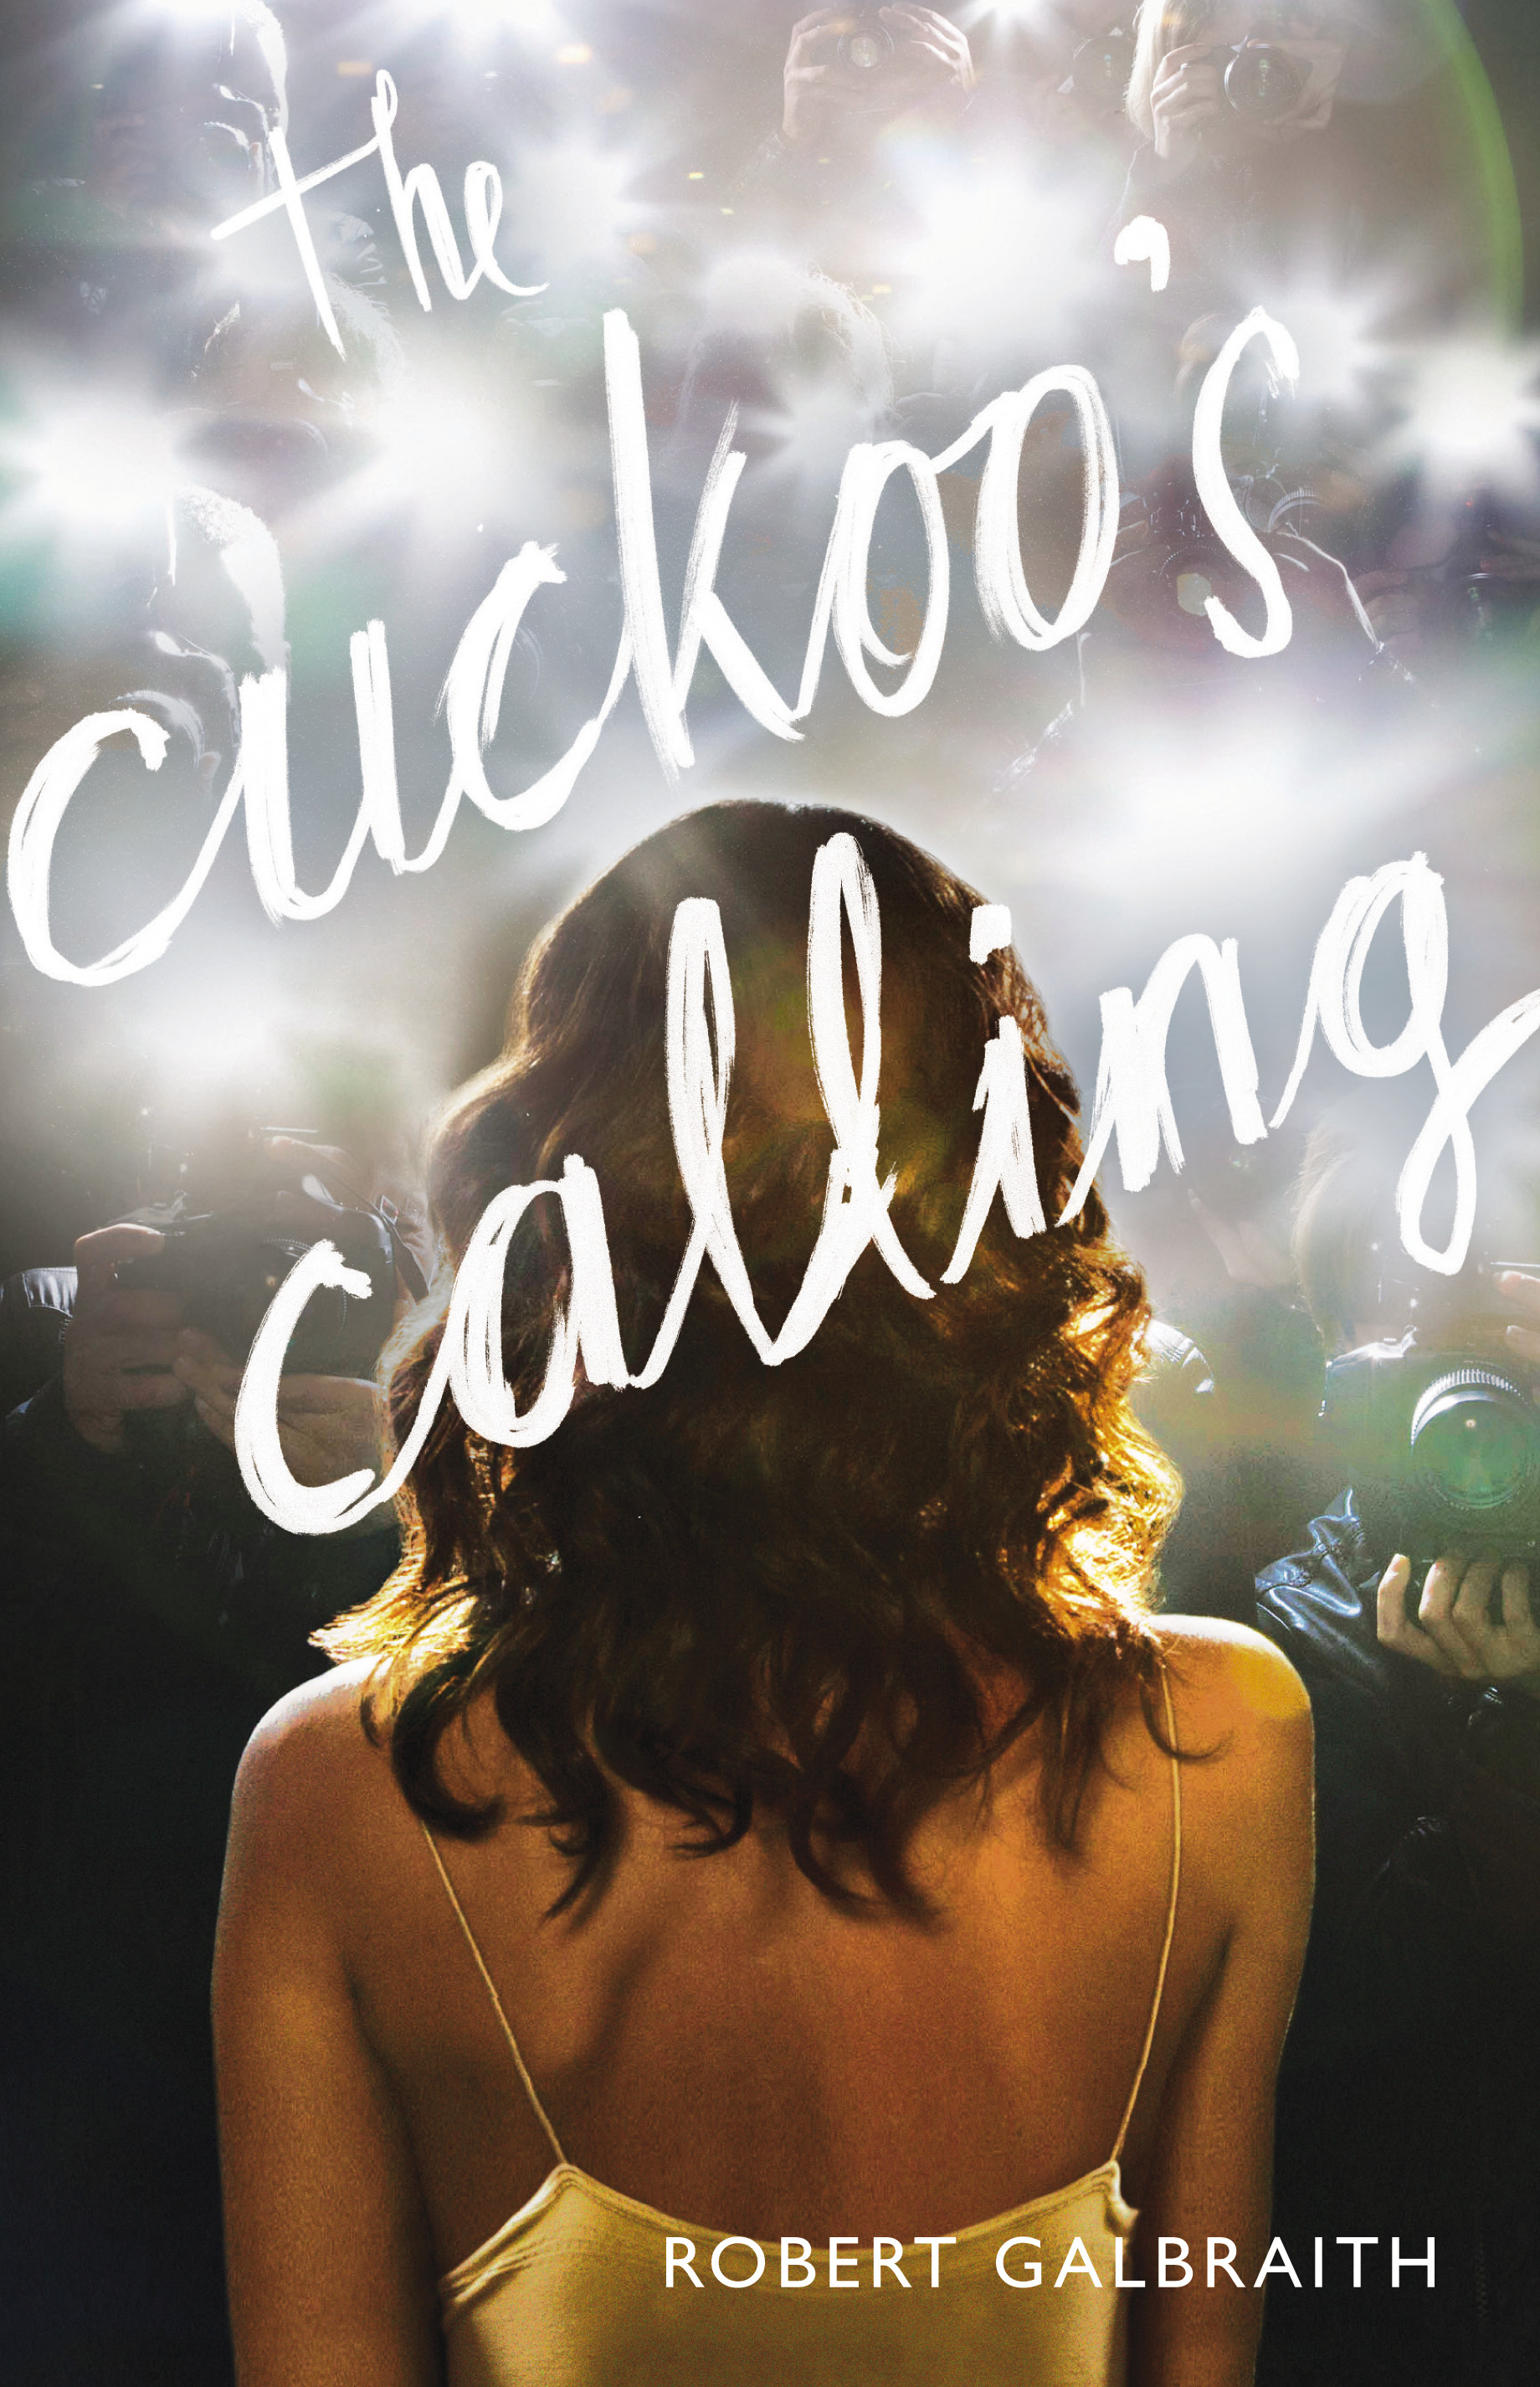 2013-08-03 The Cuckoo's Calling